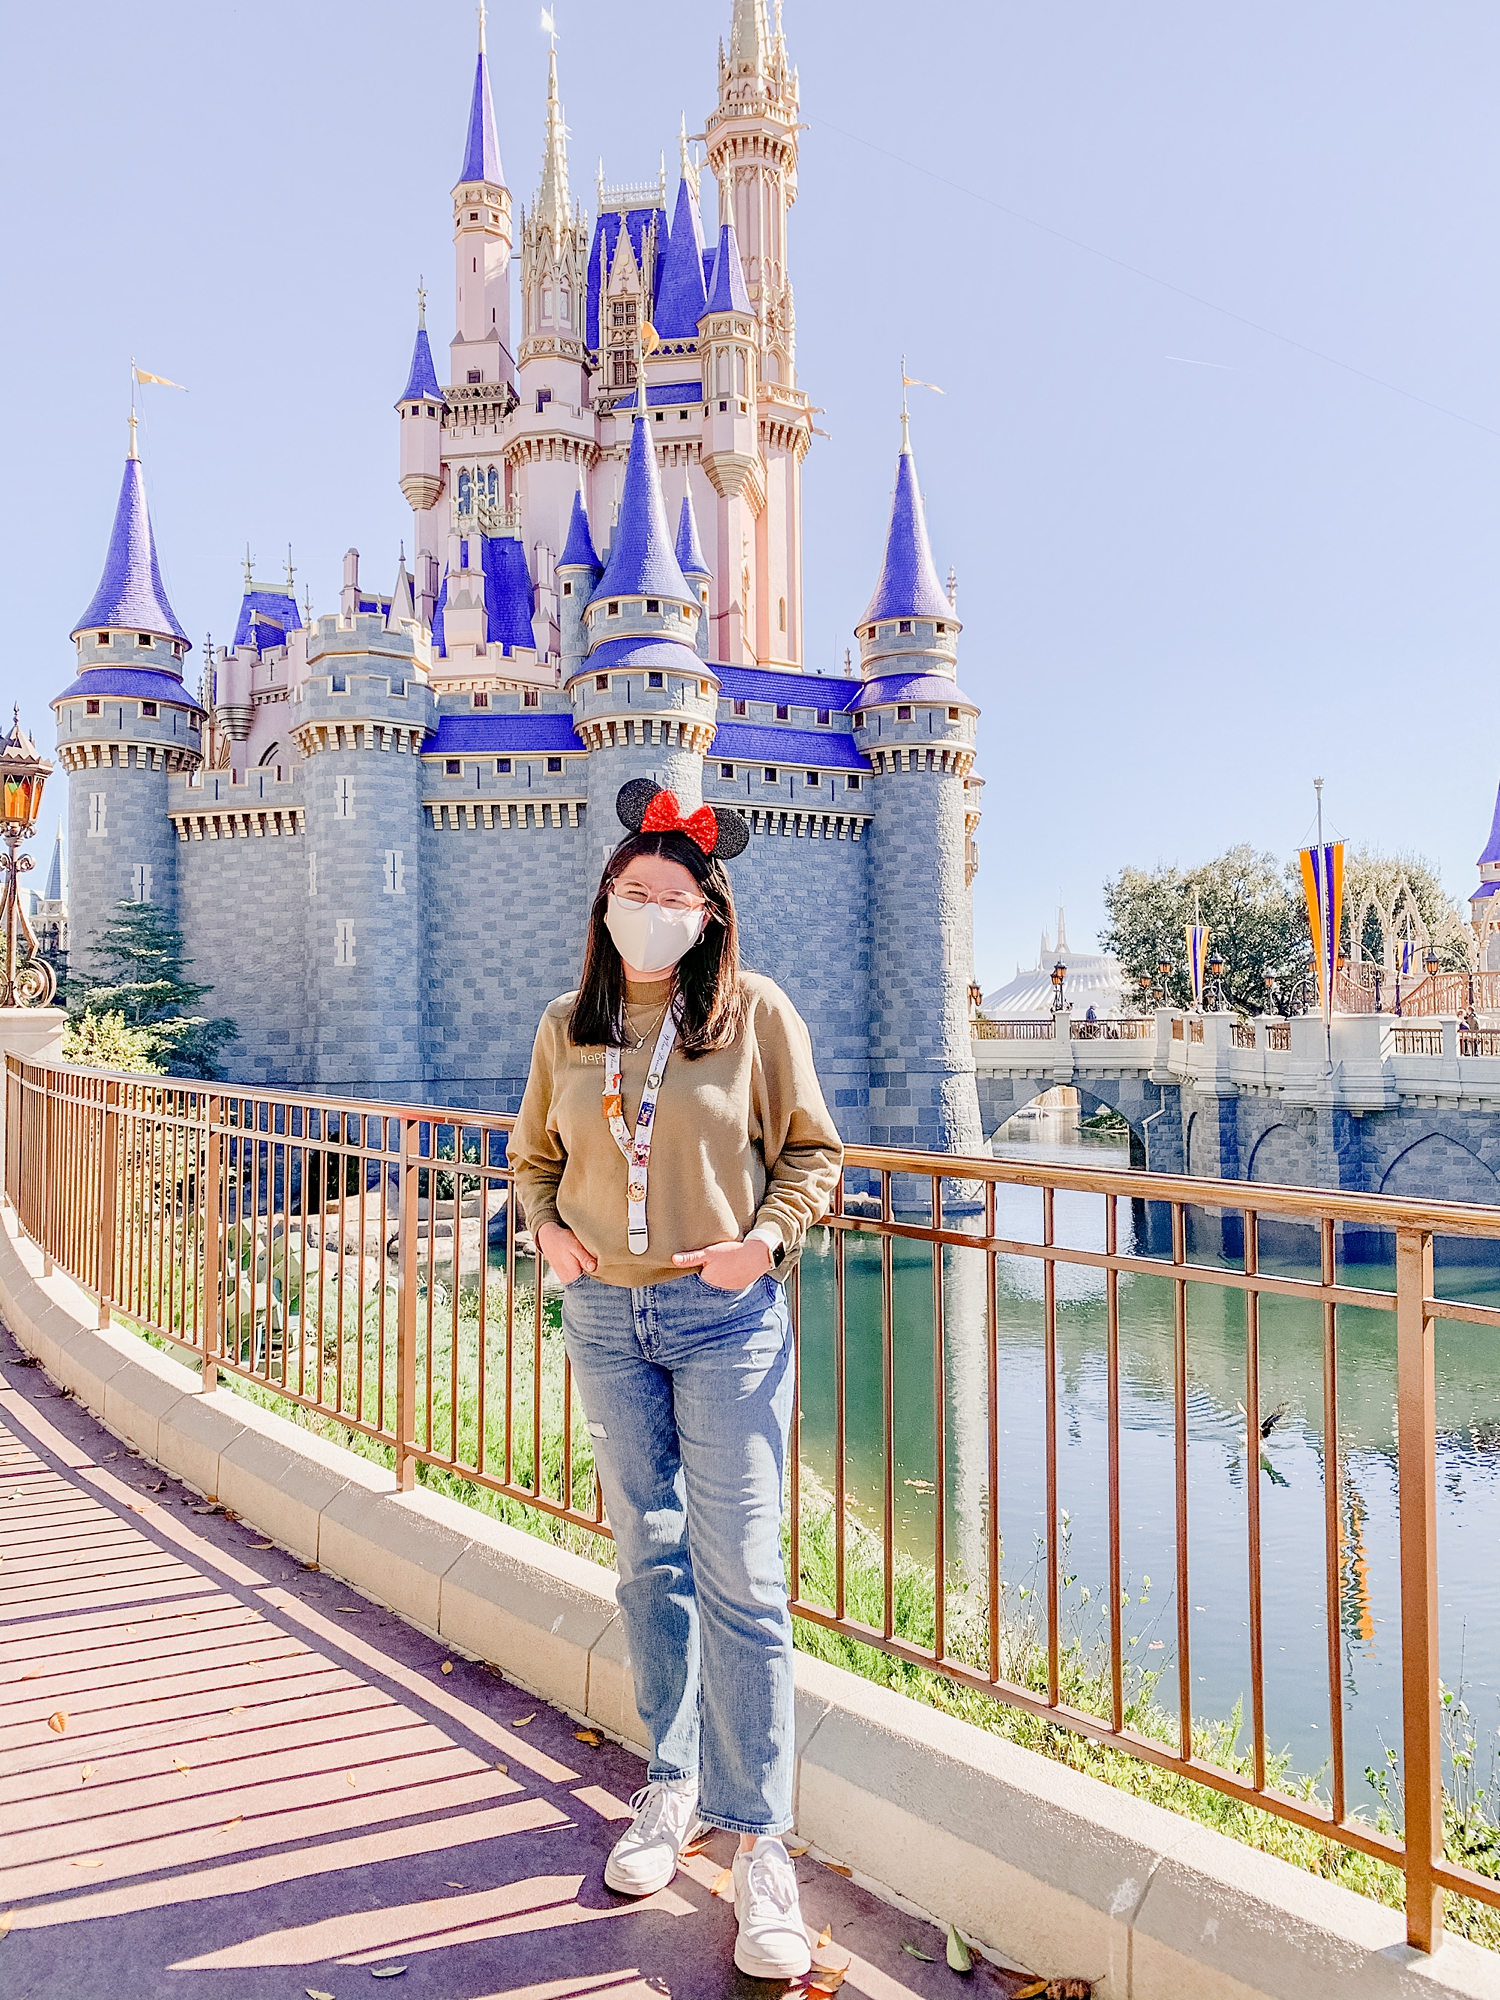 woman in Minnie ears poses by Cinderella Castle in Walt Disney World